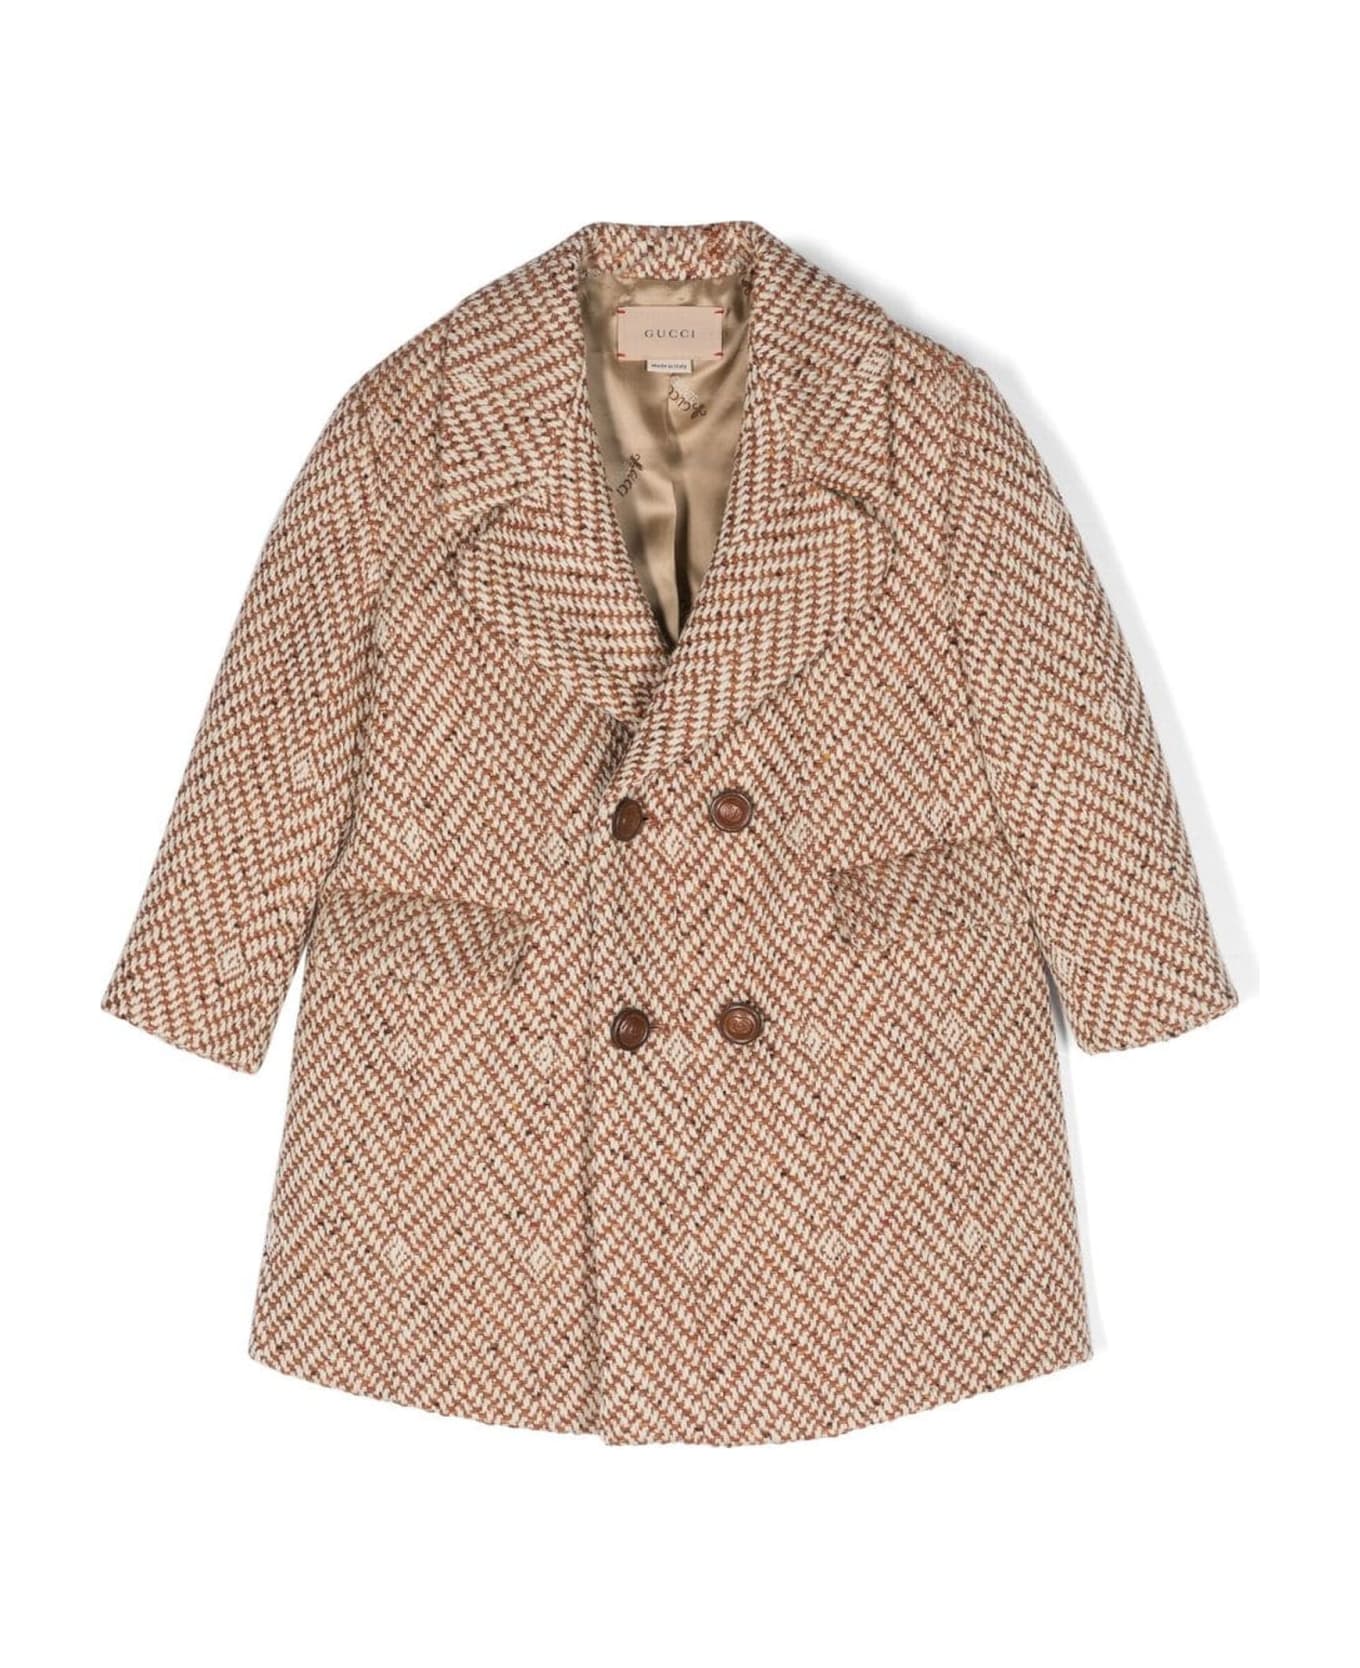 Gucci Brown Cotton Coat - BEIGE